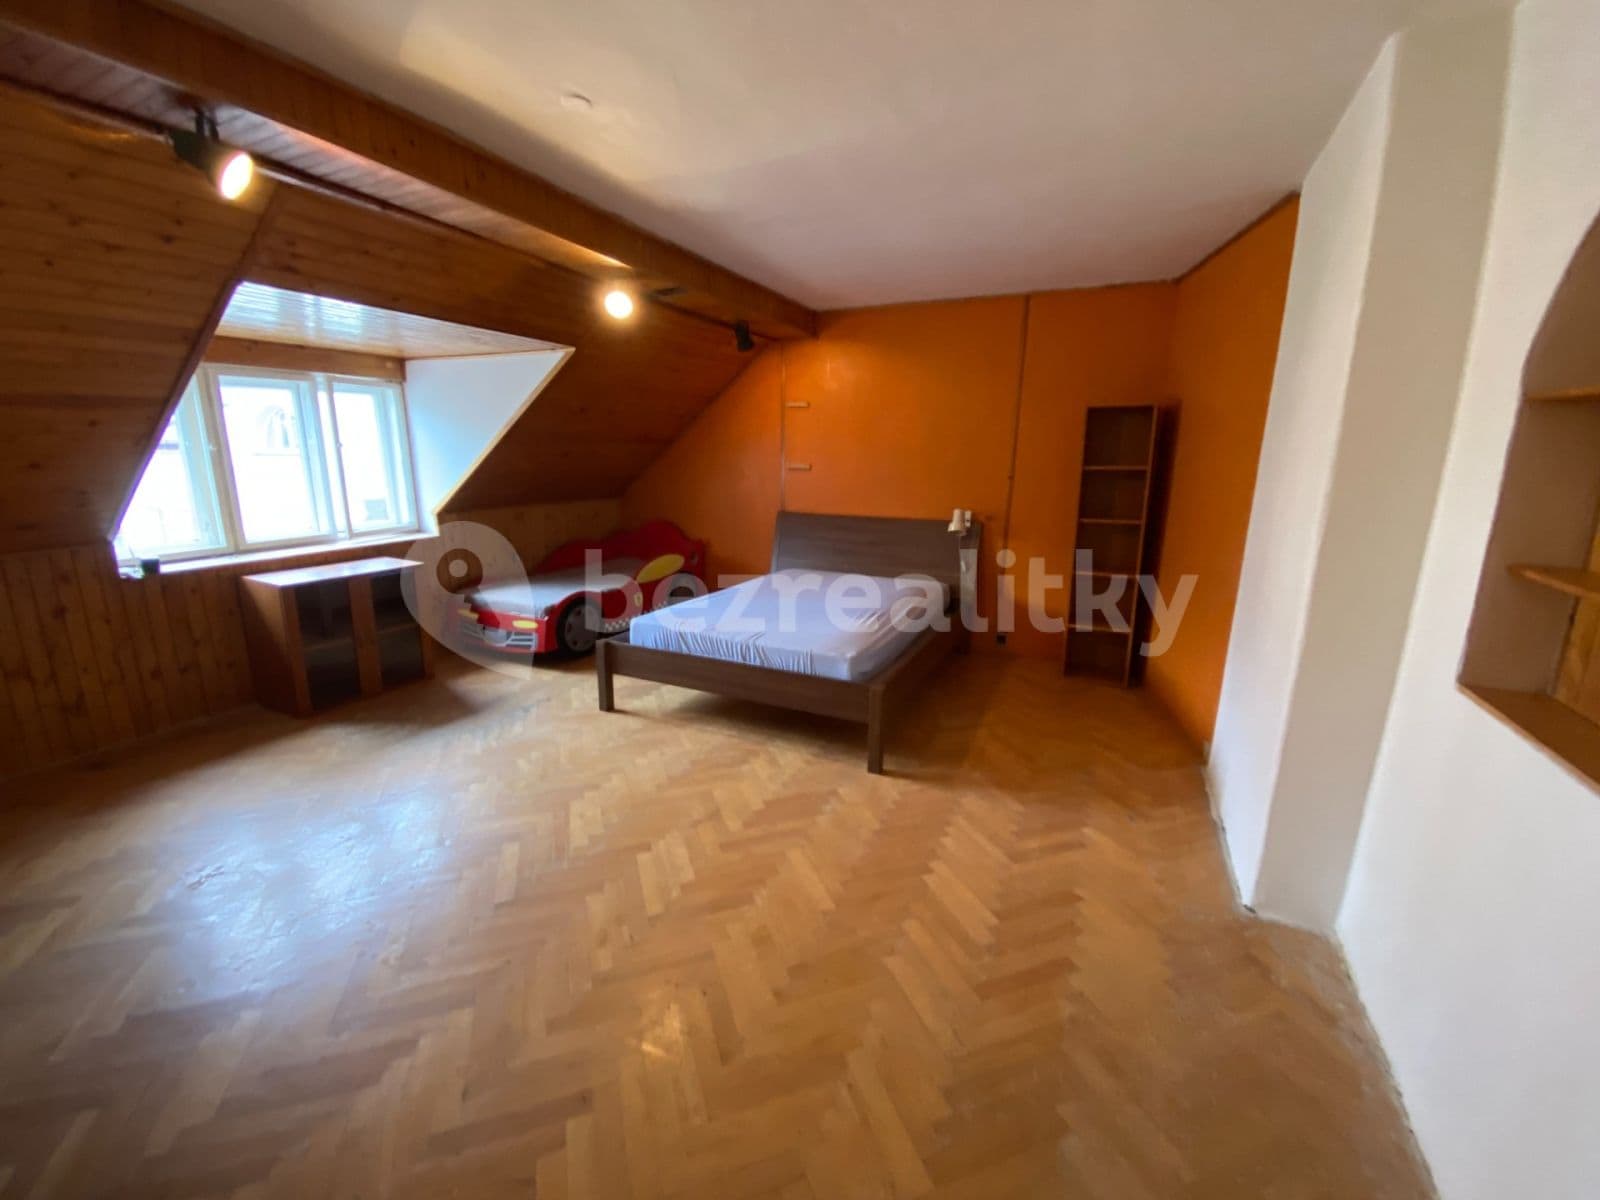 3 bedroom flat to rent, 85 m², Rokytnice nad Jizerou, Liberecký Region